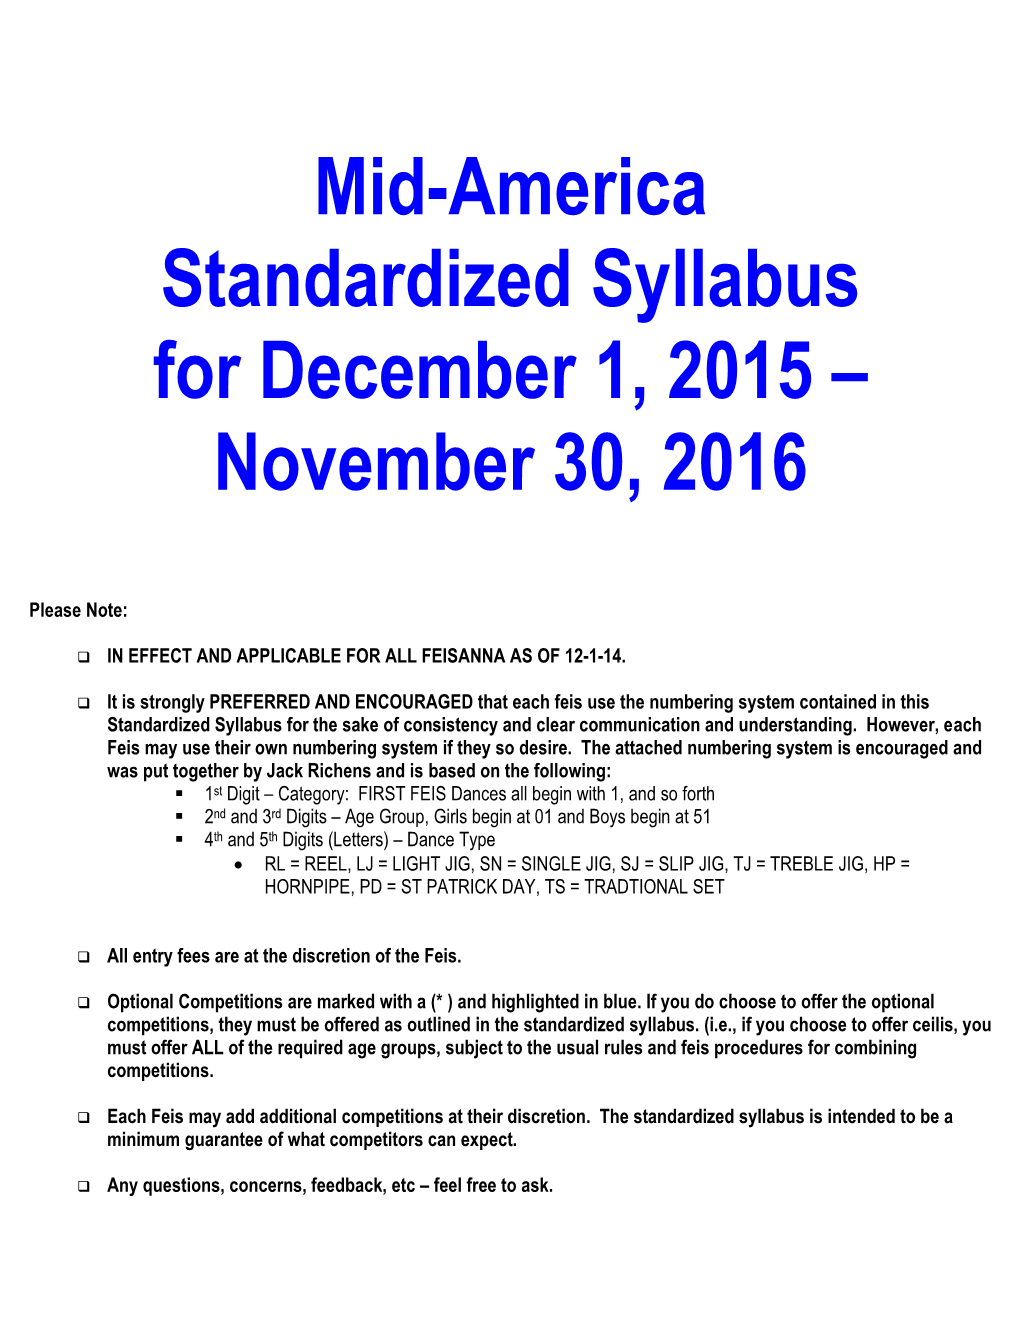 Mid-America Standardized Syllabus for December 1, 2015 – November 30, 2016